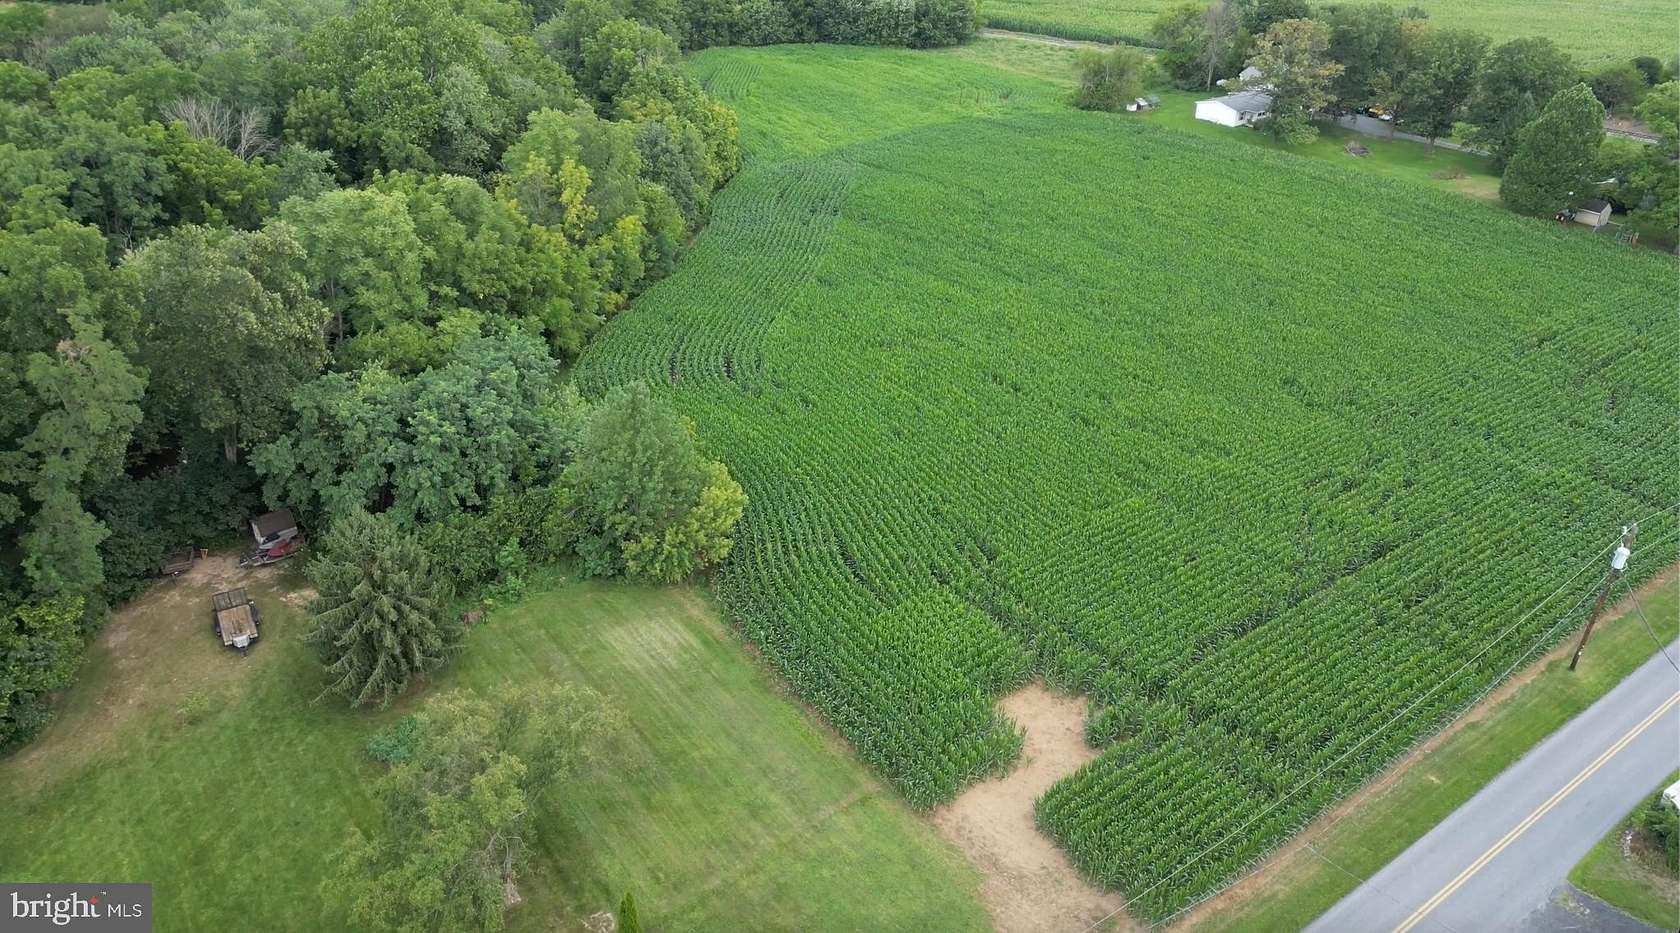 10 Acres of Land for Sale in Manheim, Pennsylvania